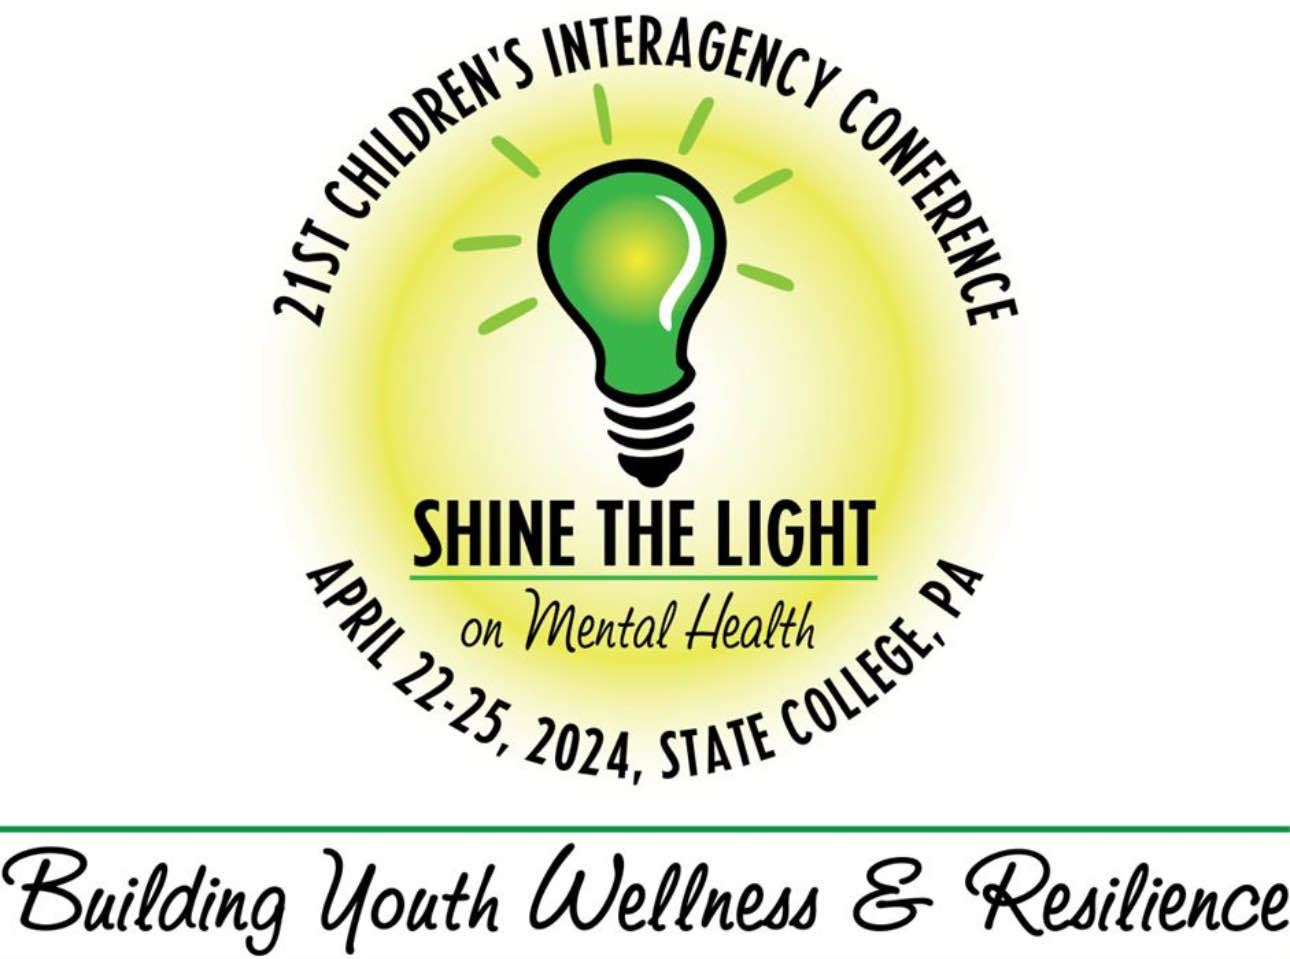 A green lightbulb logo for the 21st Children's Interagency Conference